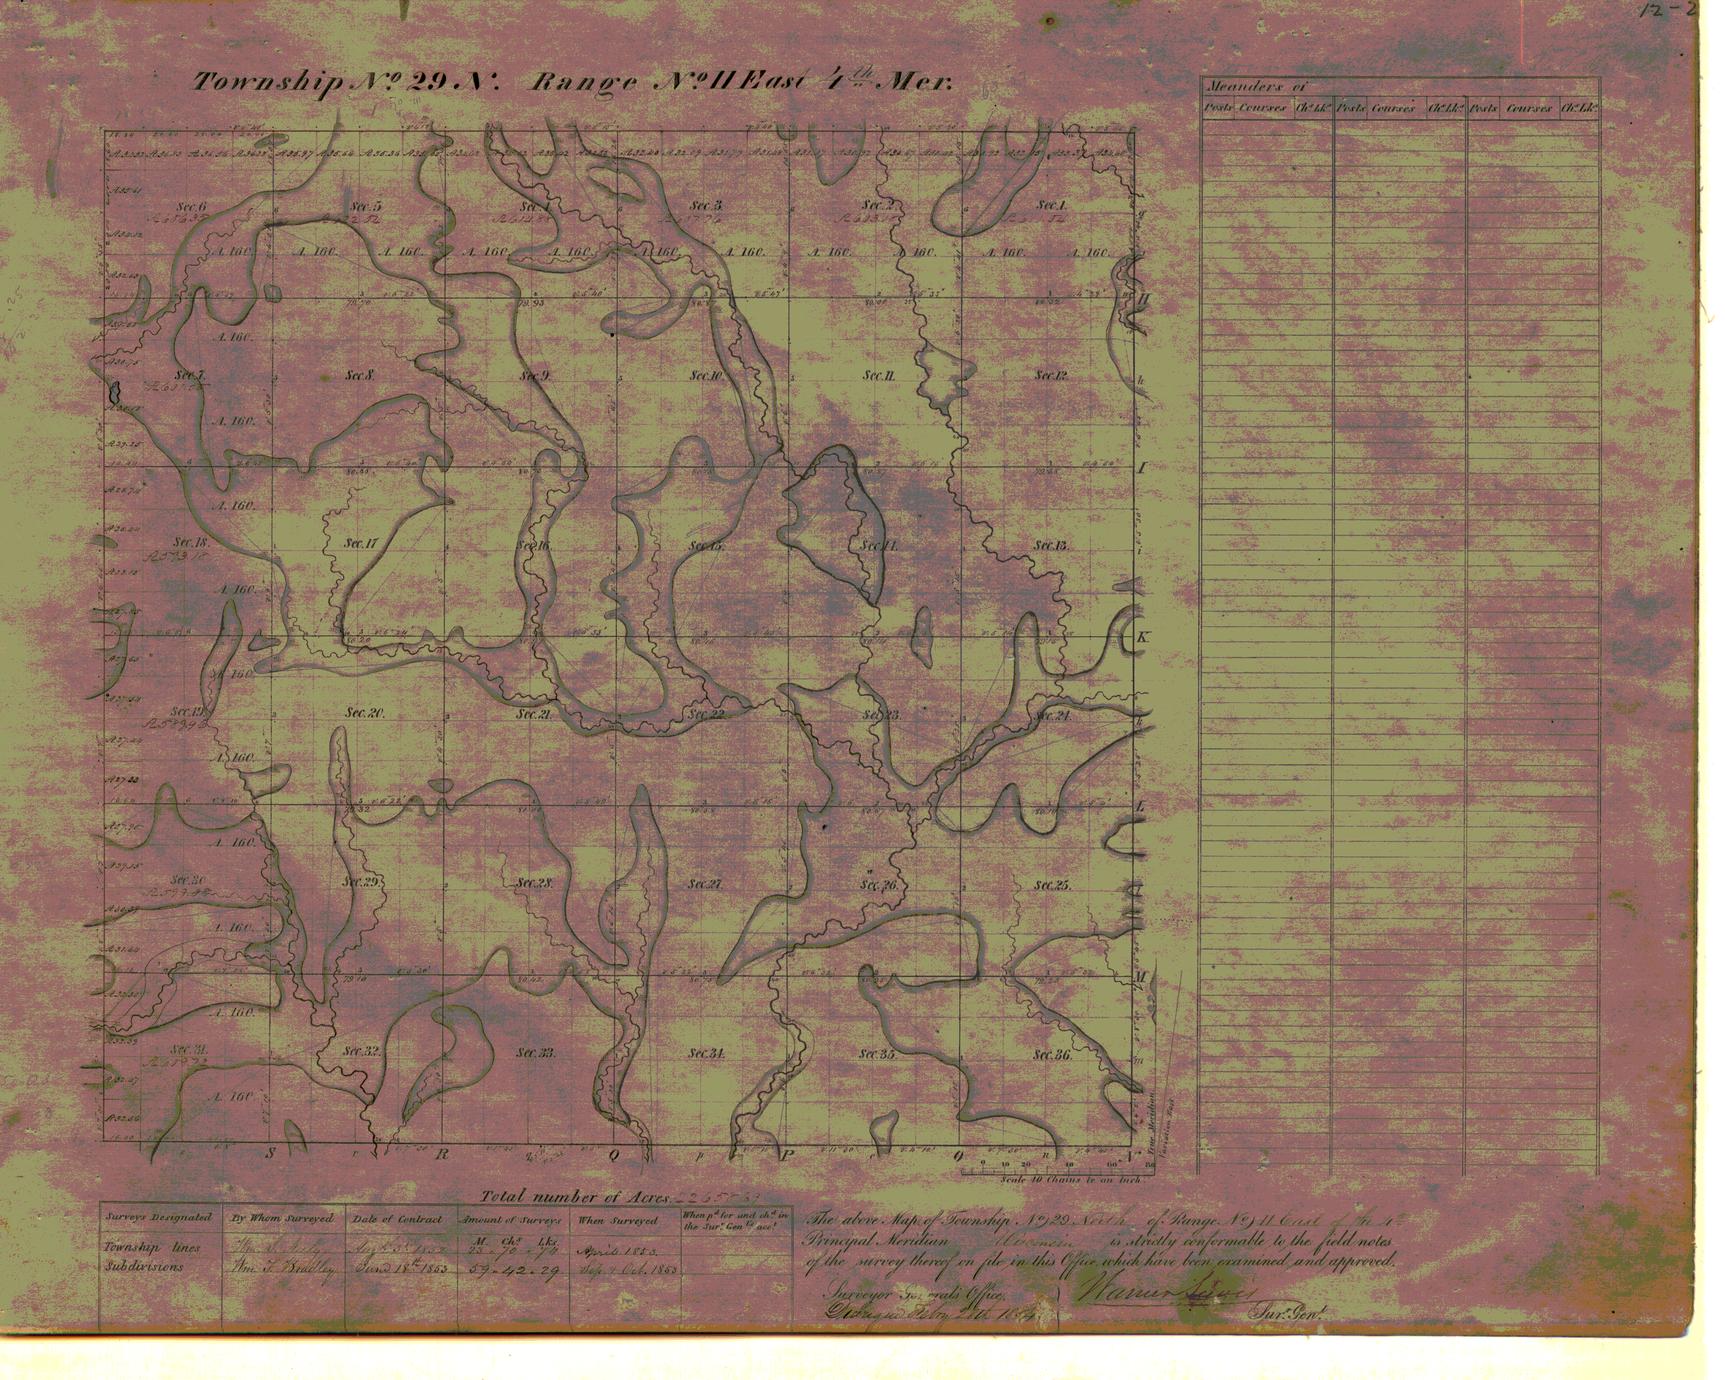 [Public Land Survey System map: Wisconsin Township 29 North, Range 11 East]